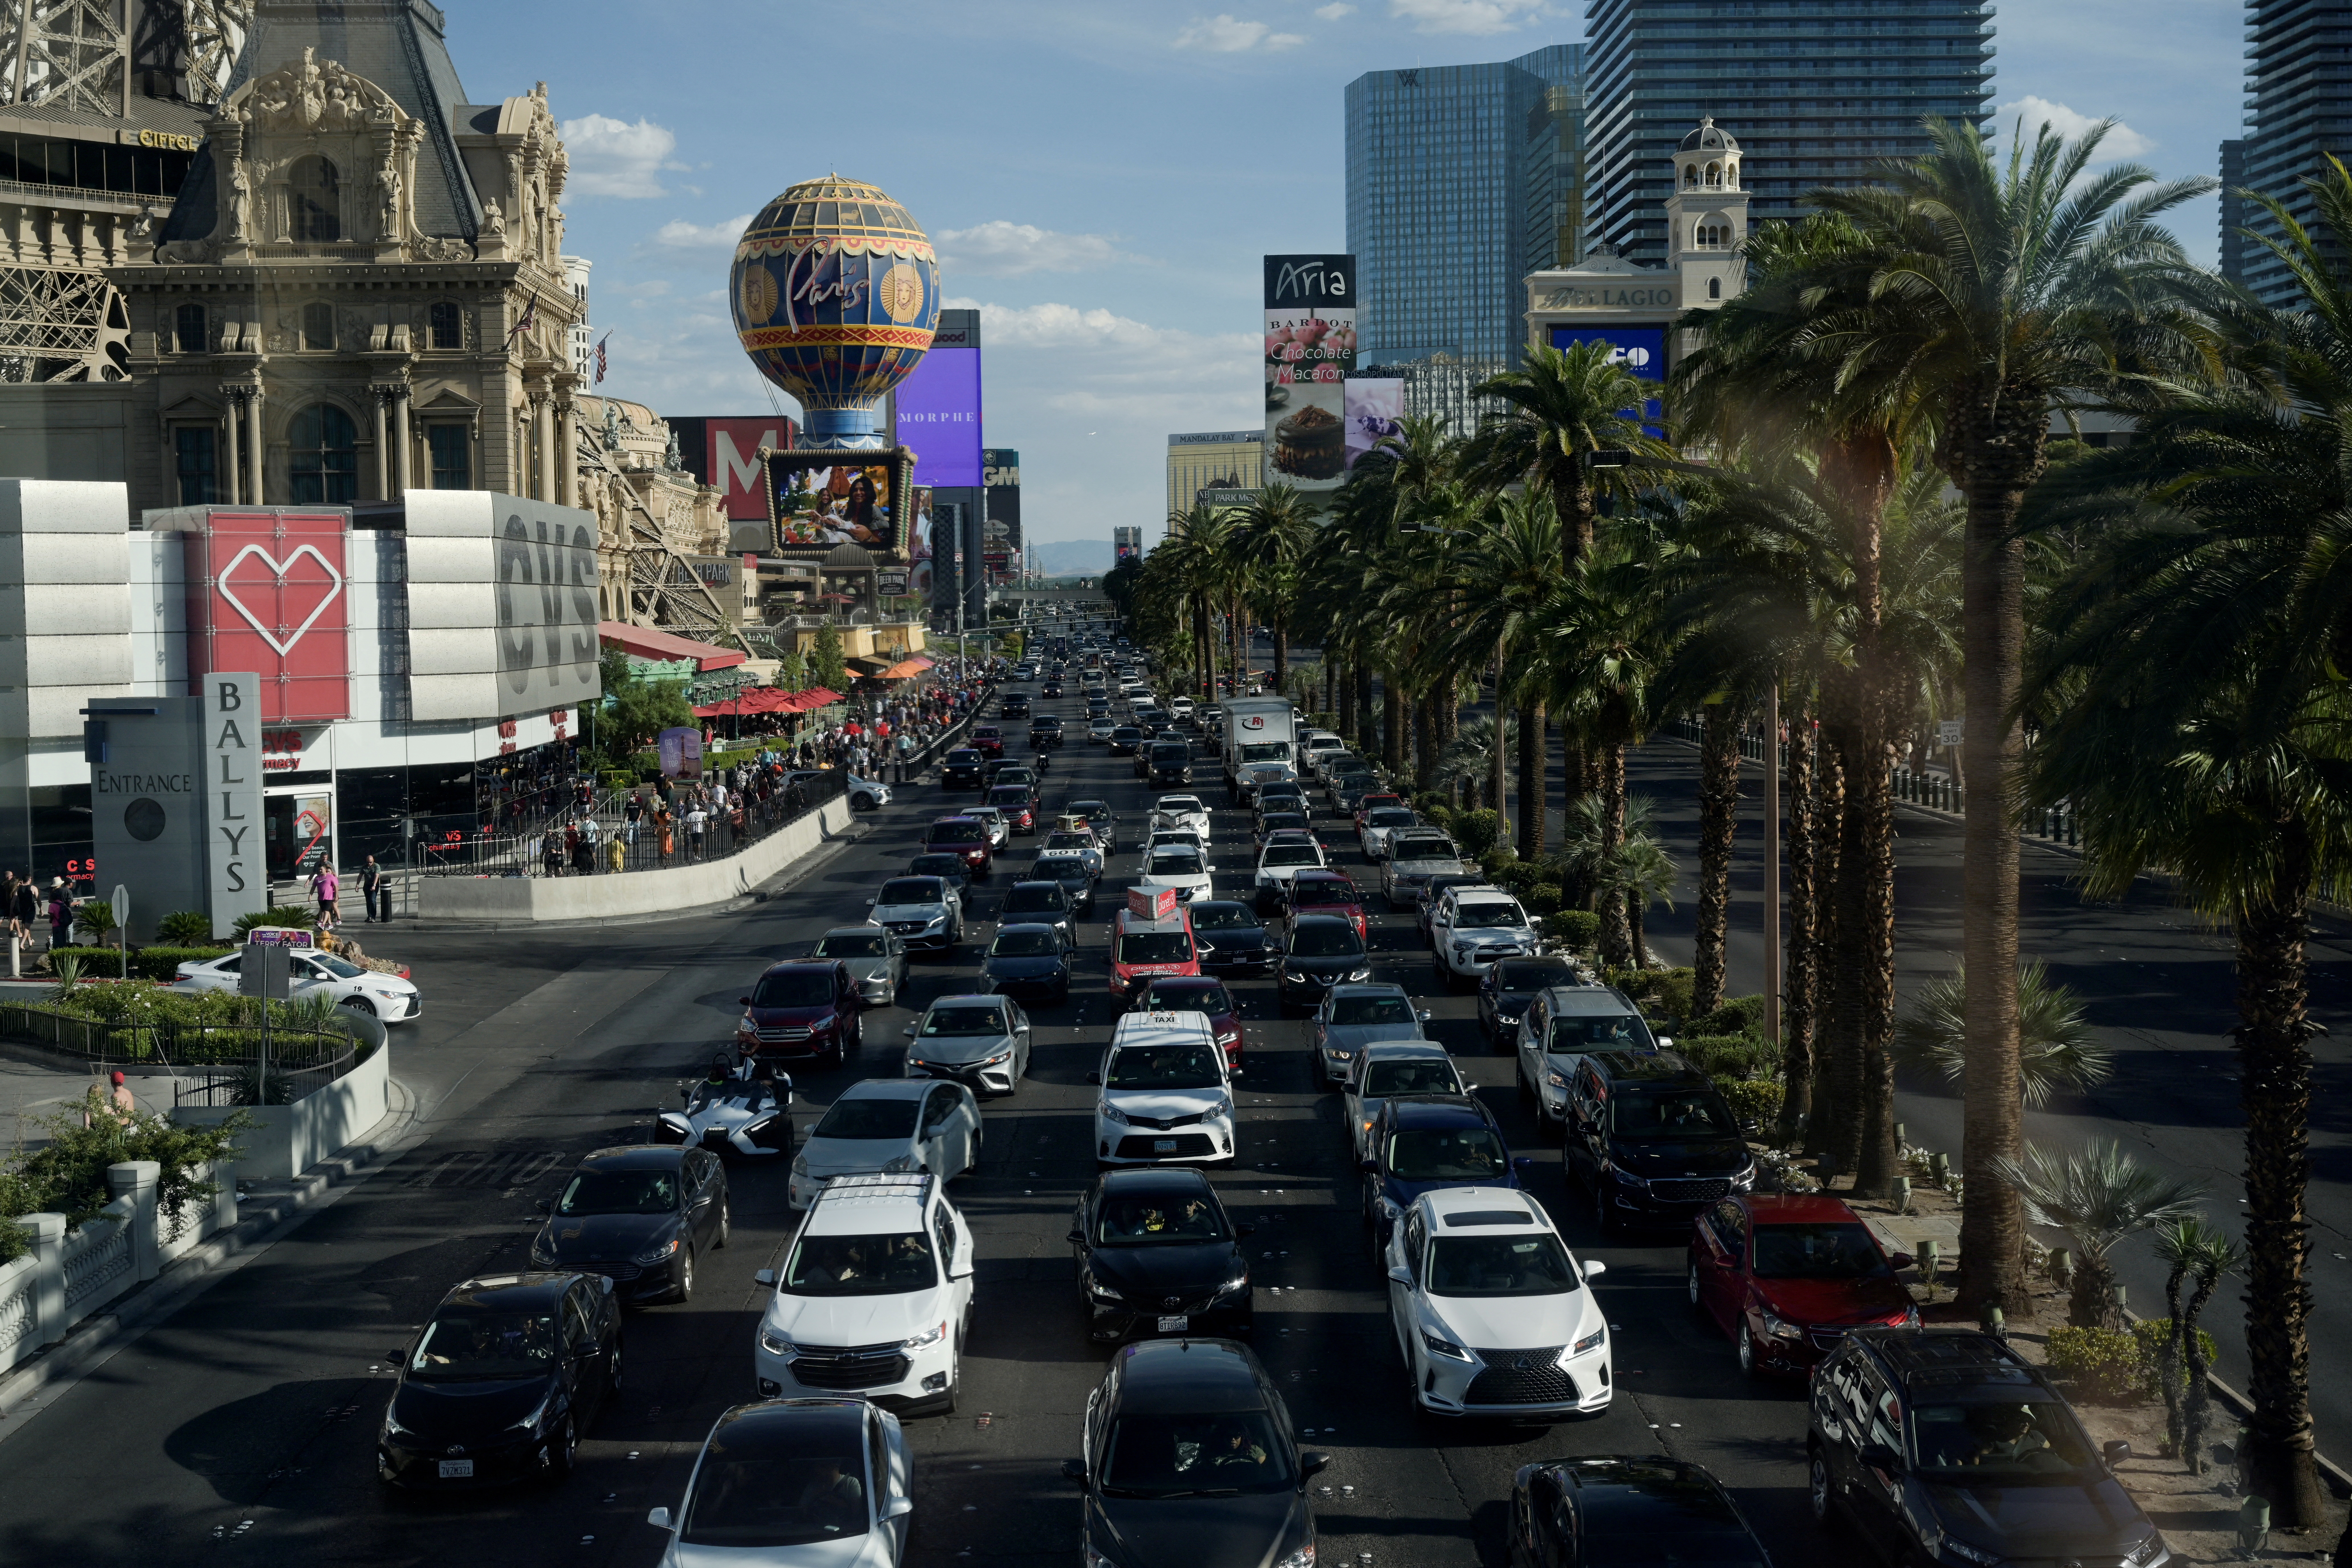 People flock to casinos and pools in Las Vegas on Memorial Day